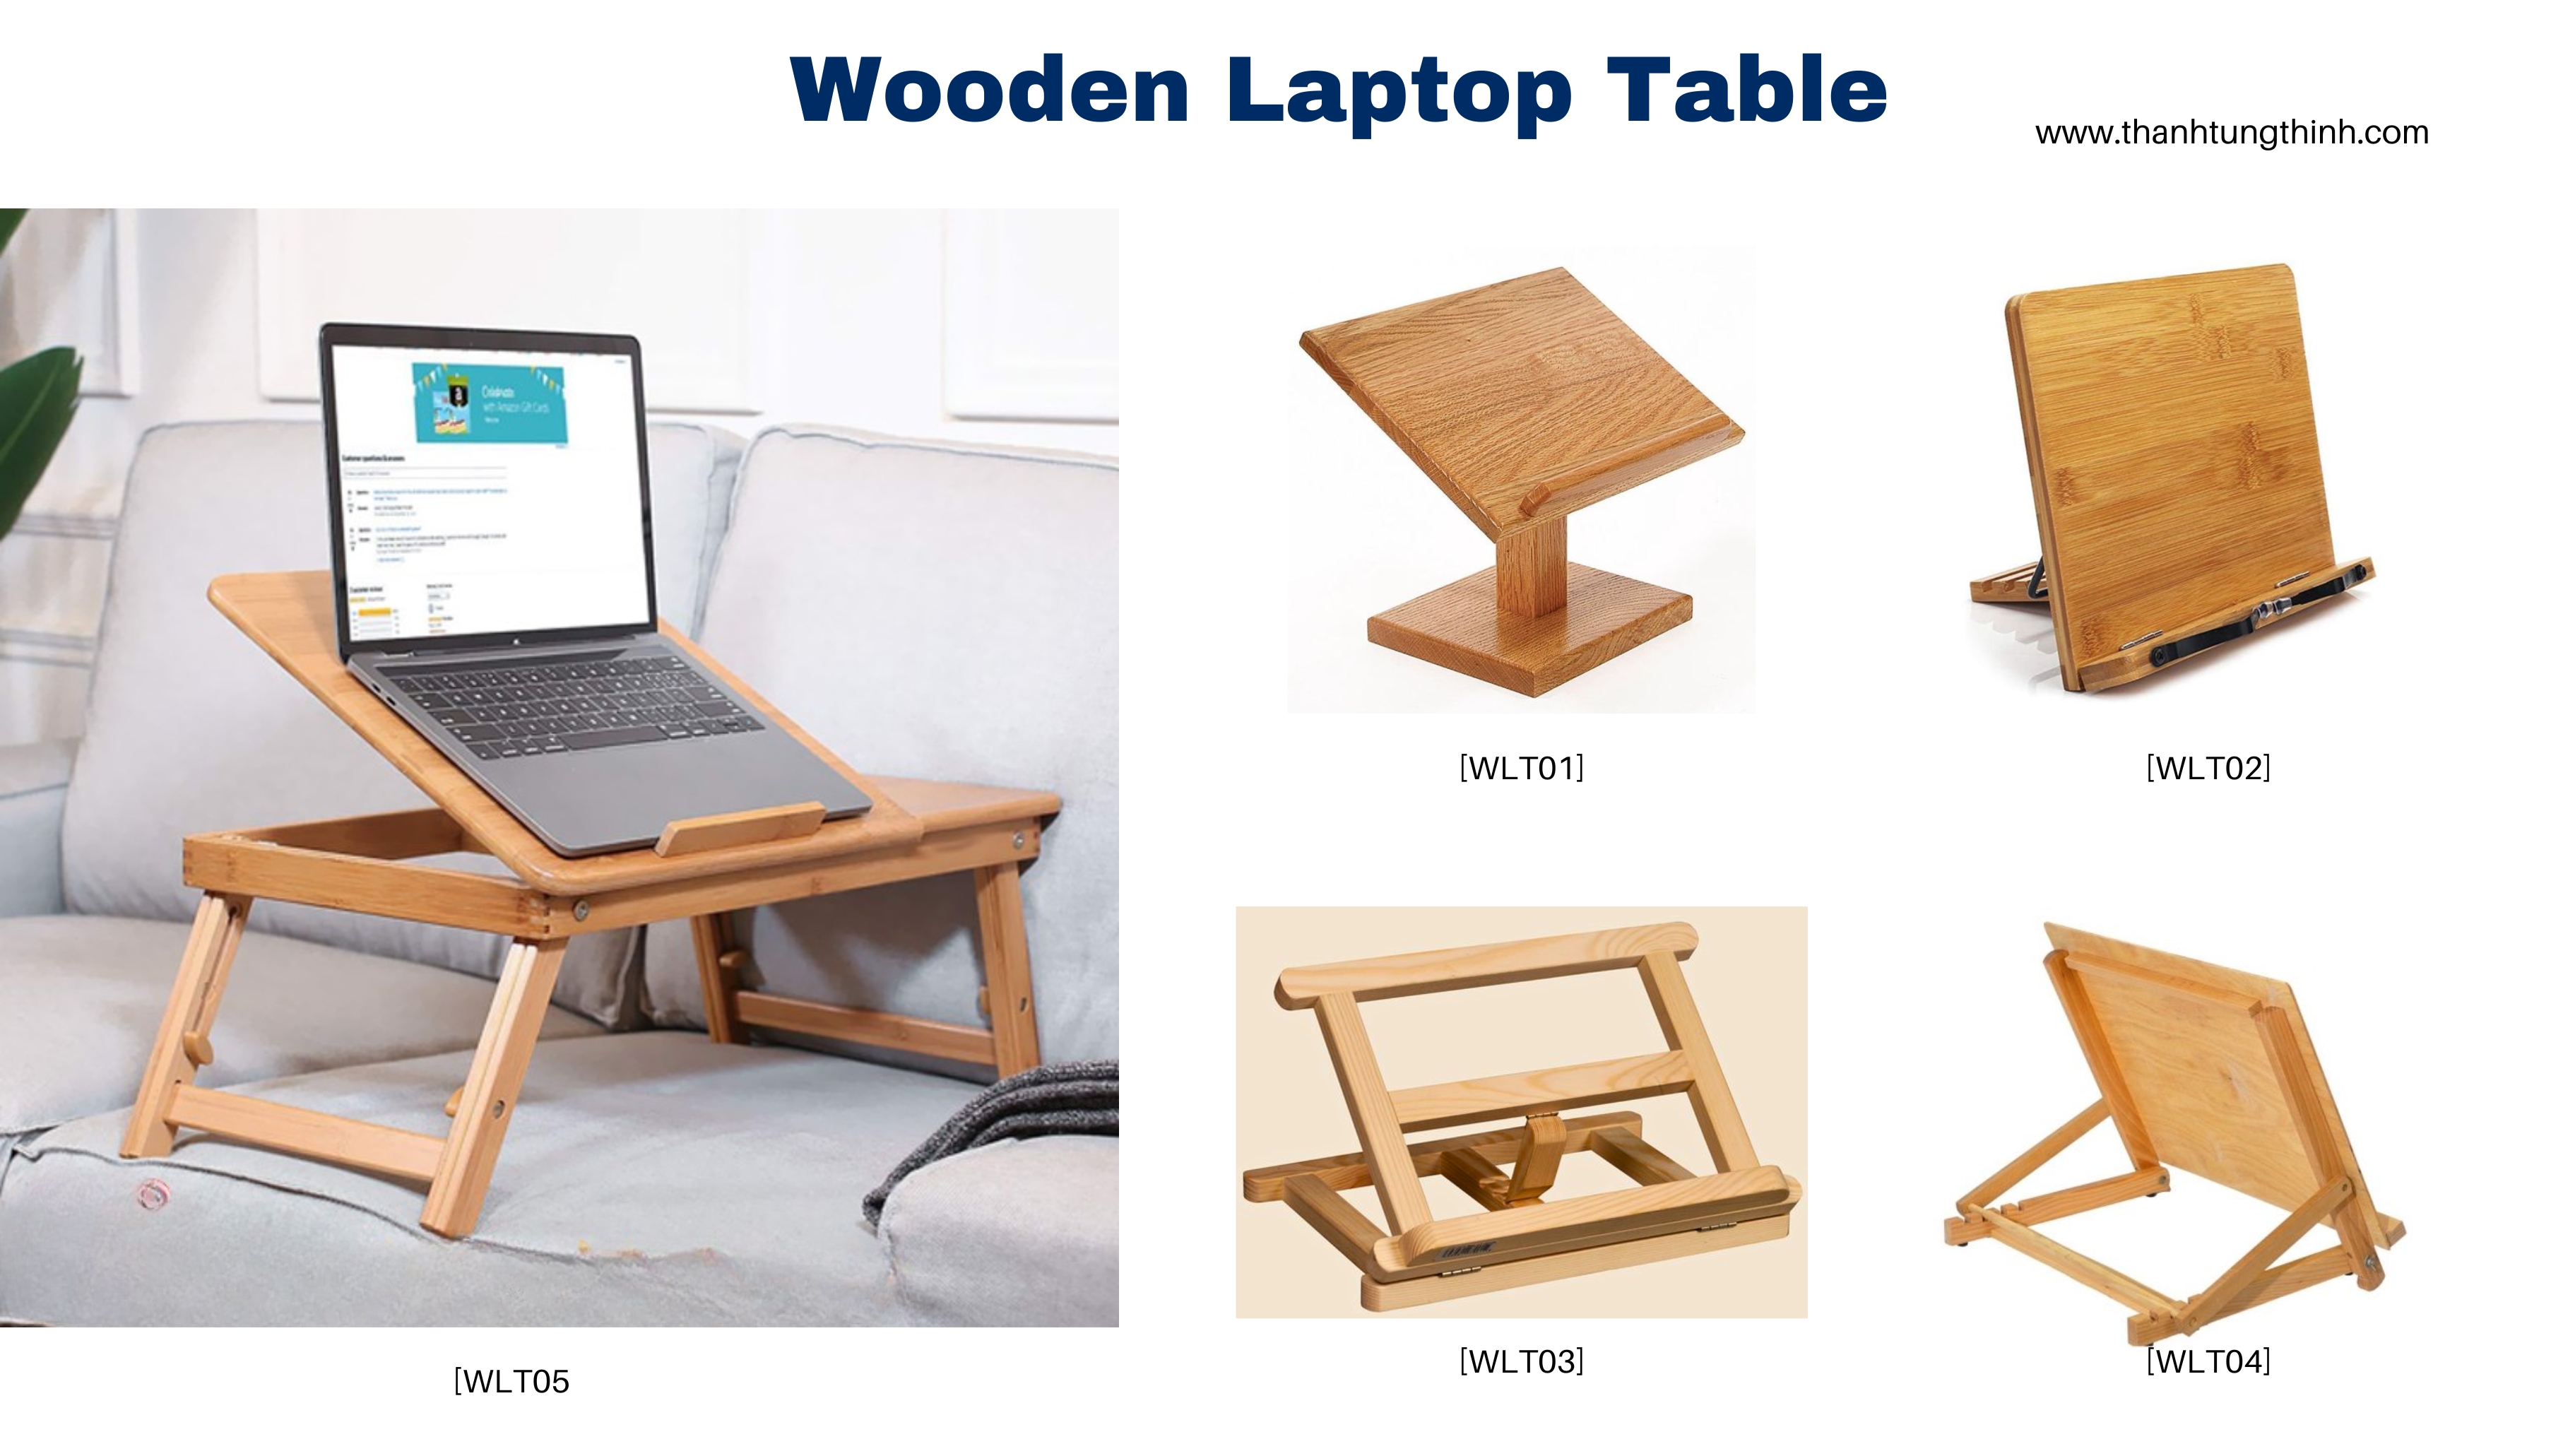 Reliable Wooden Laptop Table Manufacturer - Wholesale supplier in Vietnam